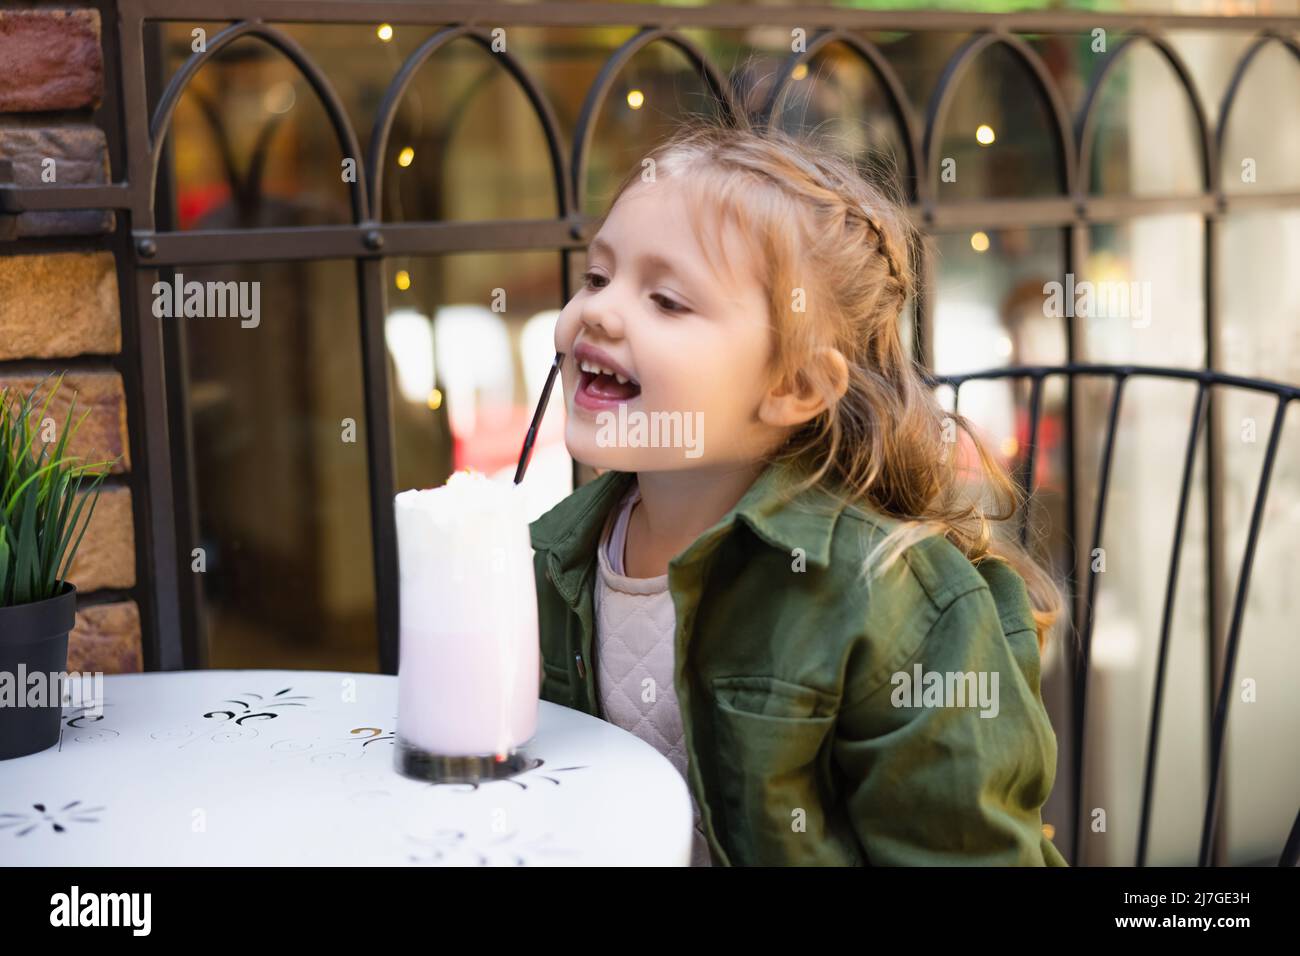 https://c8.alamy.com/comp/2J7GE3H/happy-child-reaching-straw-in-glass-of-tasty-milkshake-outdoors-2J7GE3H.jpg